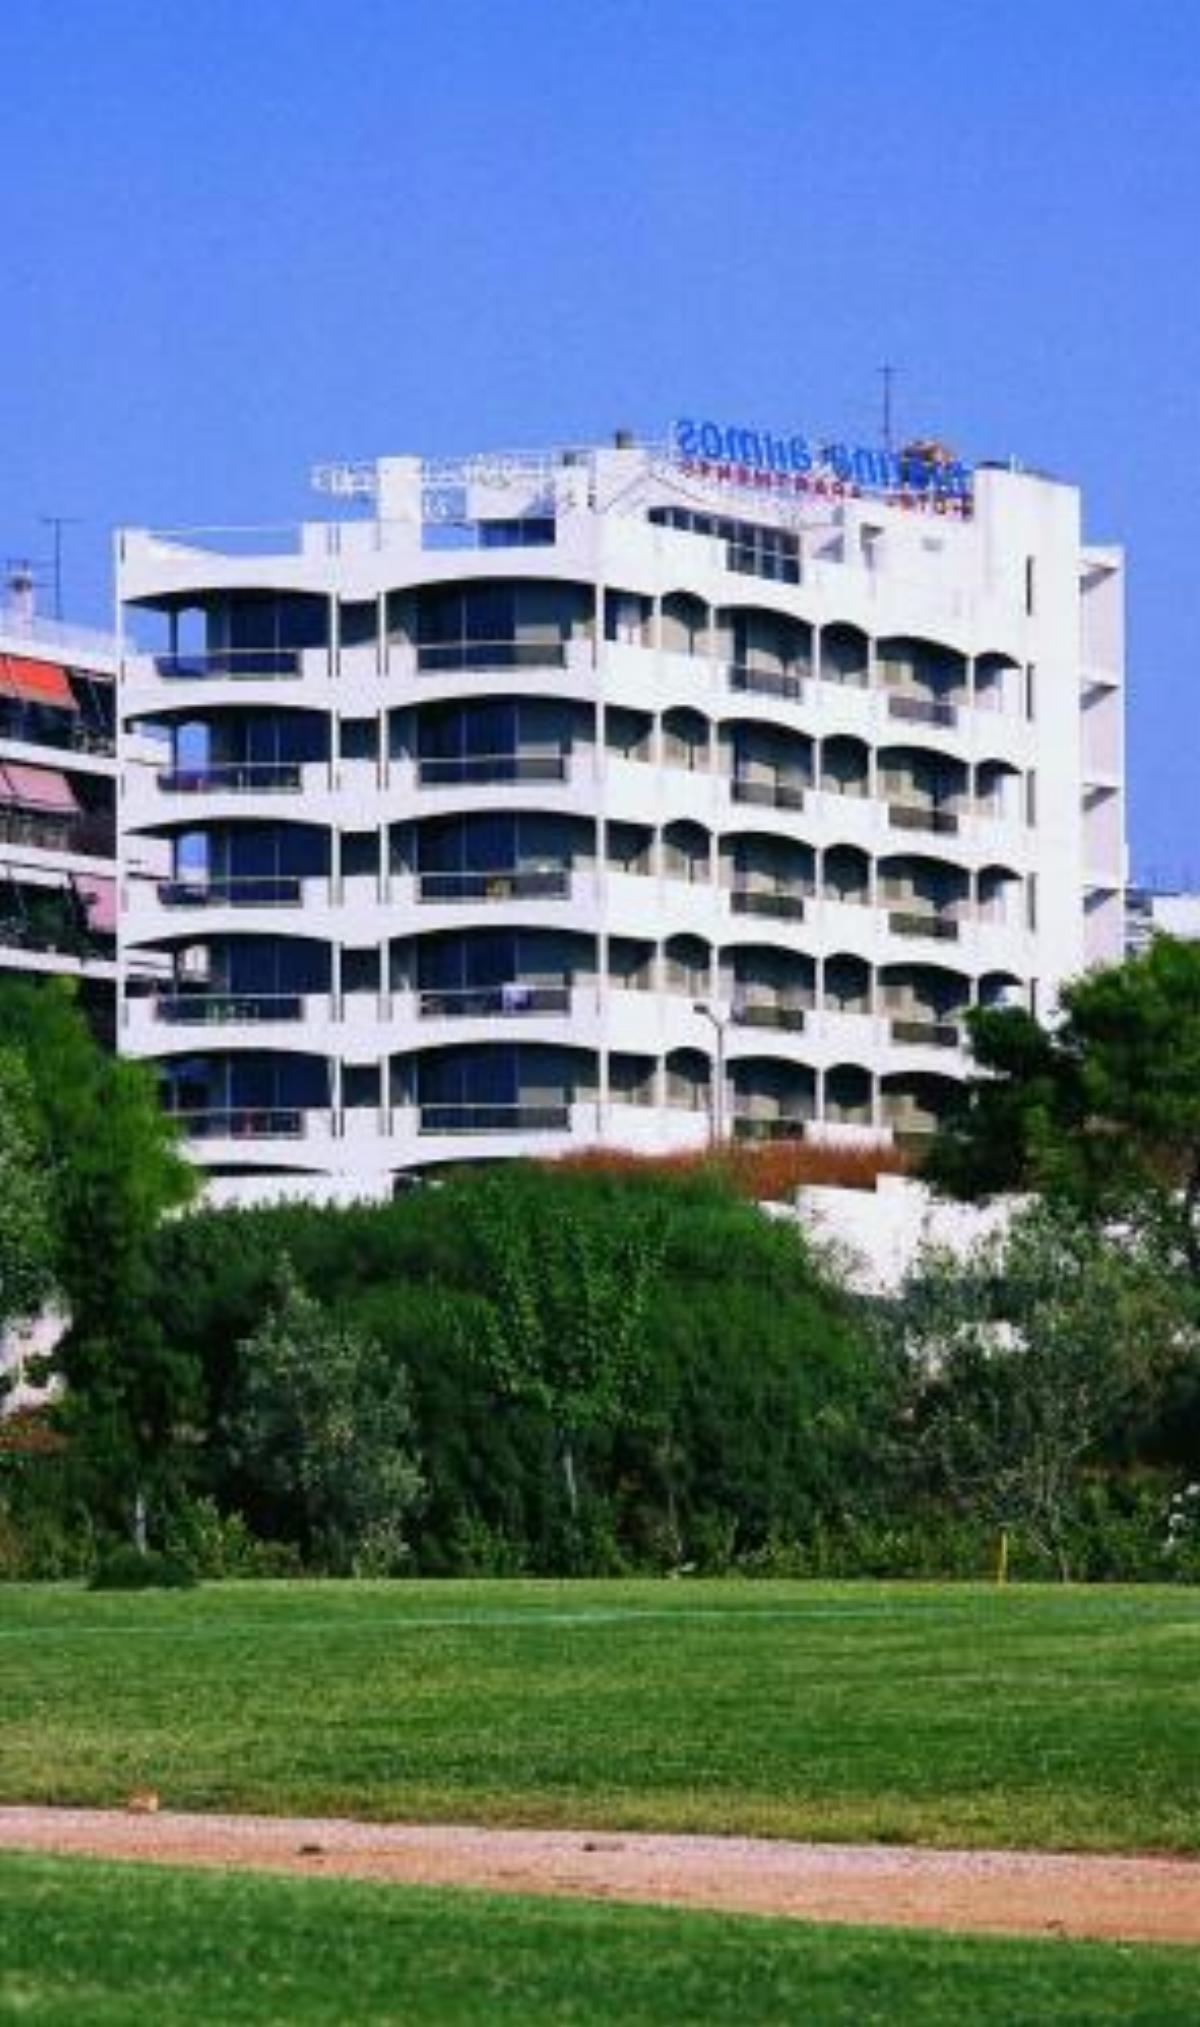 Marina Alimos Hotel Apartments Hotel Athens Greece